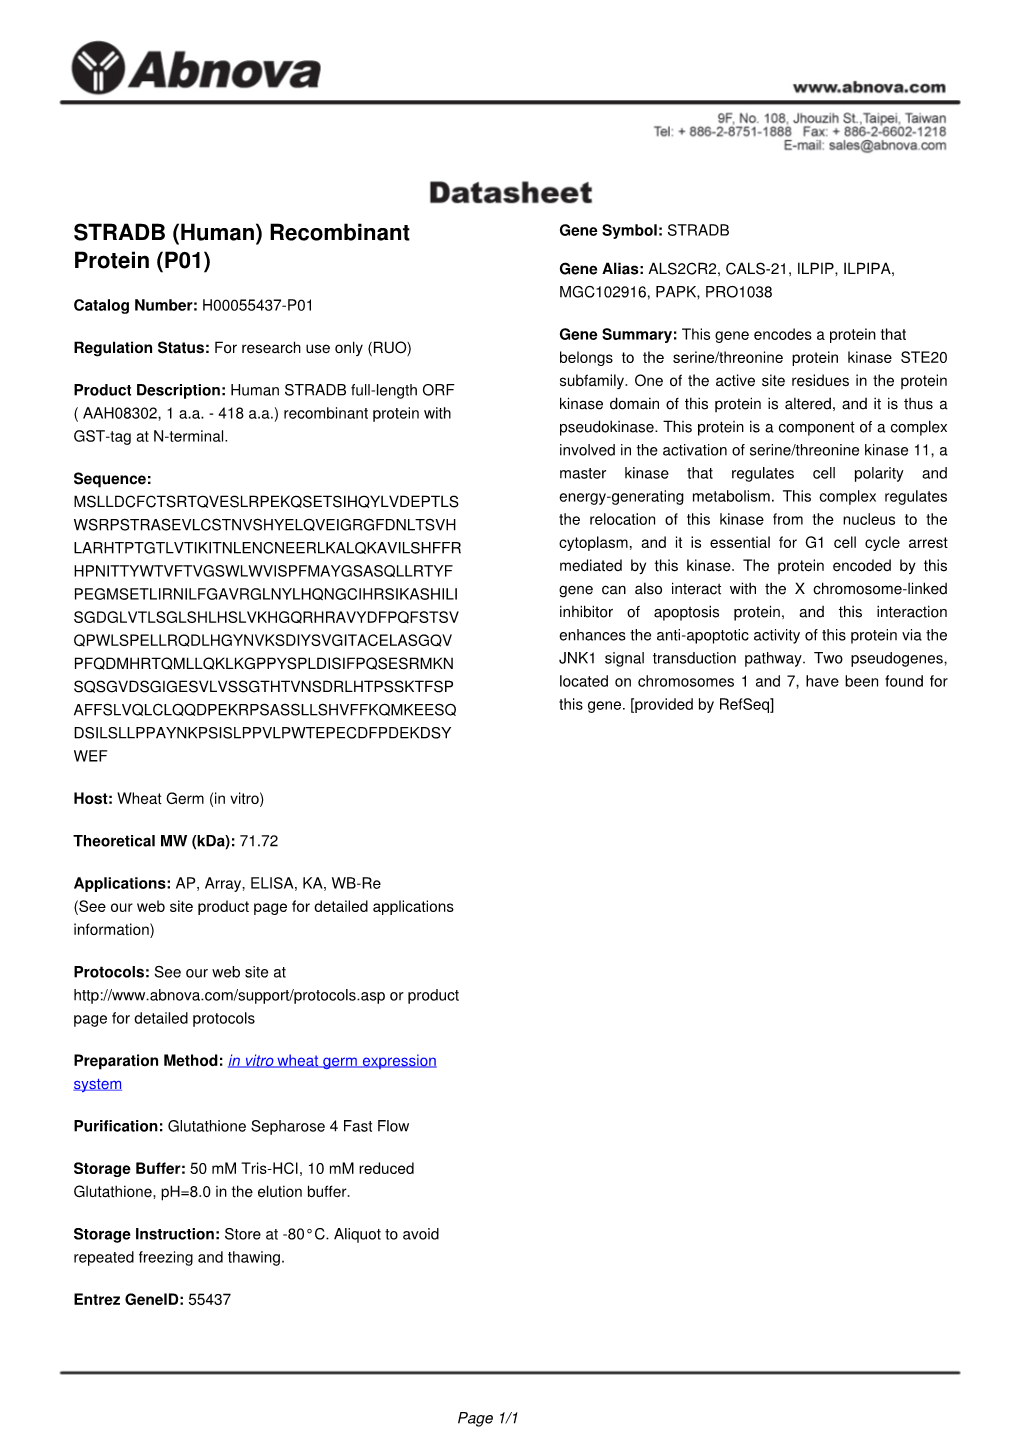 STRADB (Human) Recombinant Protein (P01)